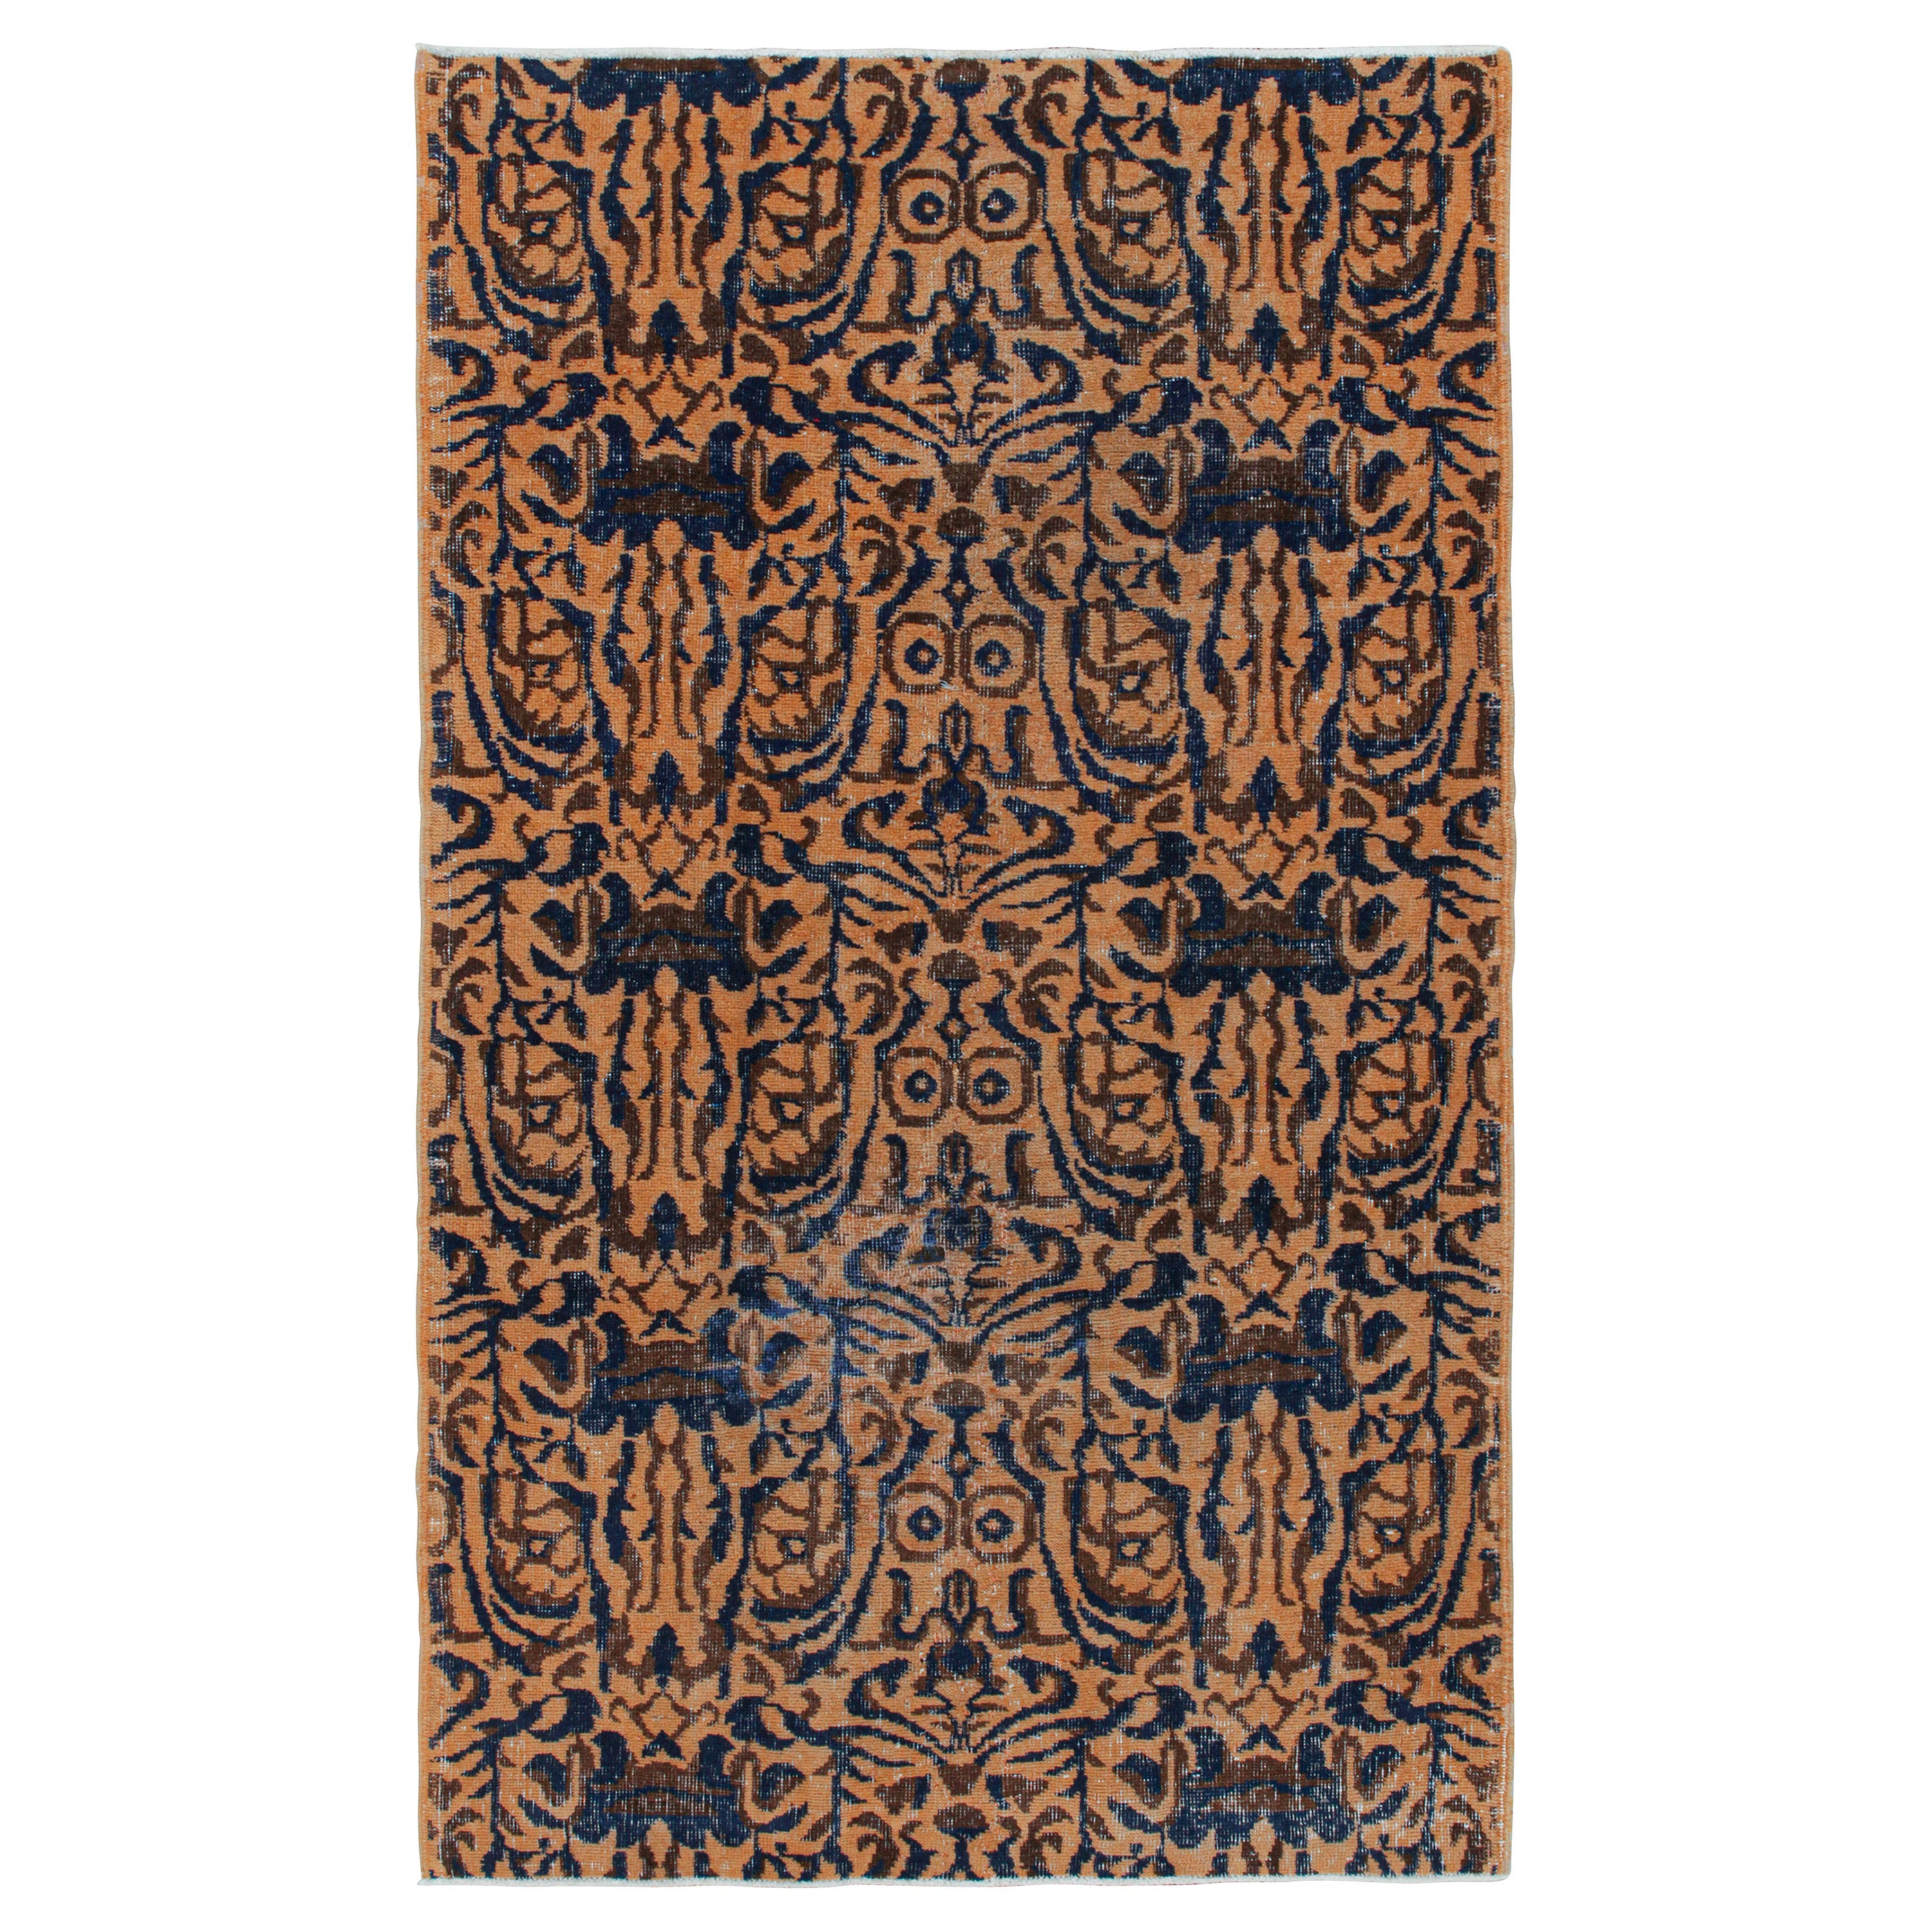 Vintage Zeki Müren Rug in Orange with Brown and Blue Patterns by Rug & Kilim For Sale